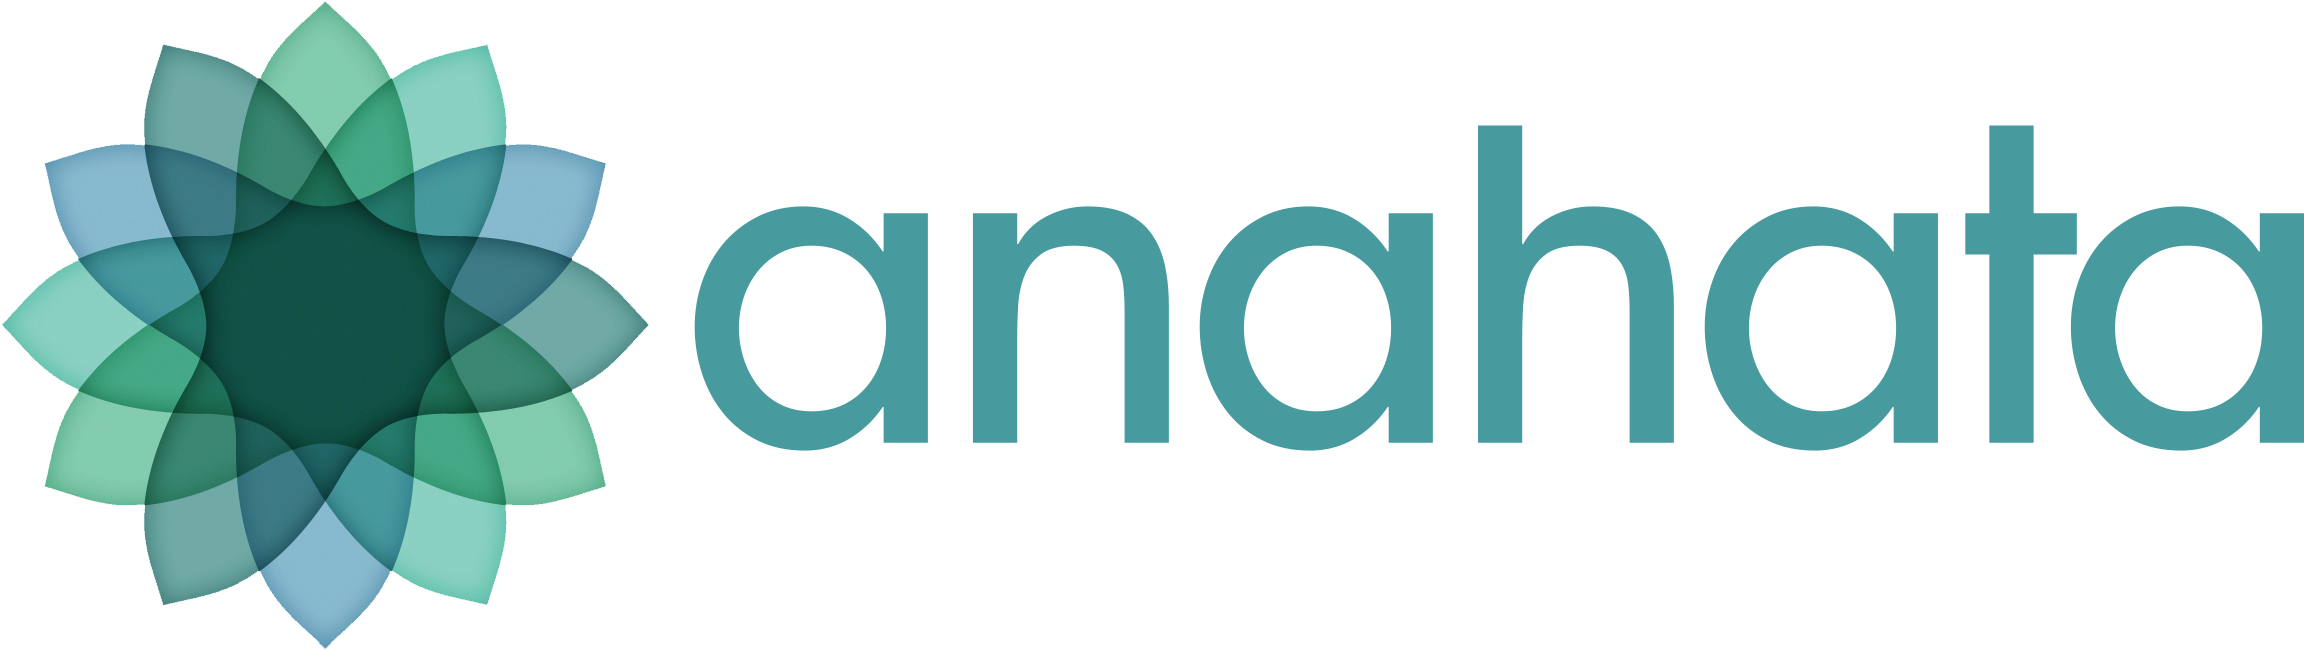 Anahata Technologies Pty Ltd